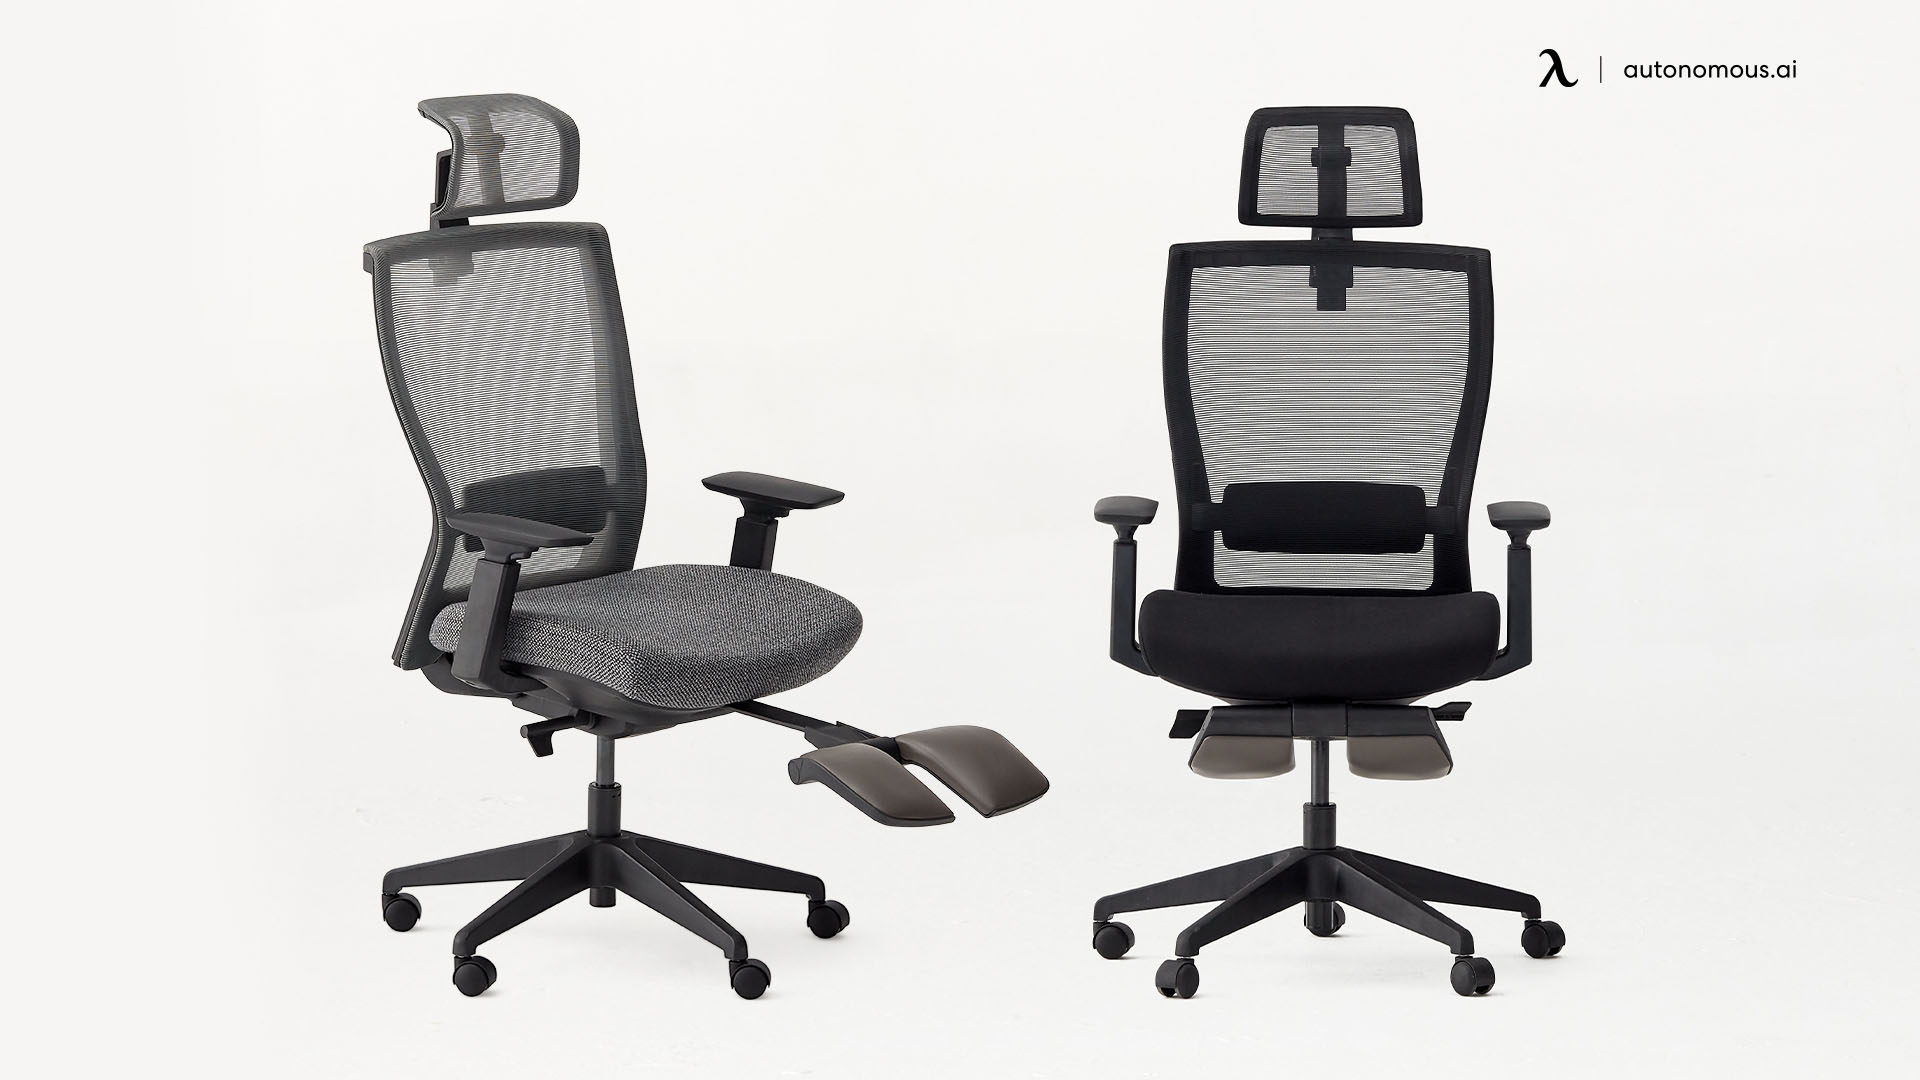 Autonomous’ ErgoChair Recline comfy office chair